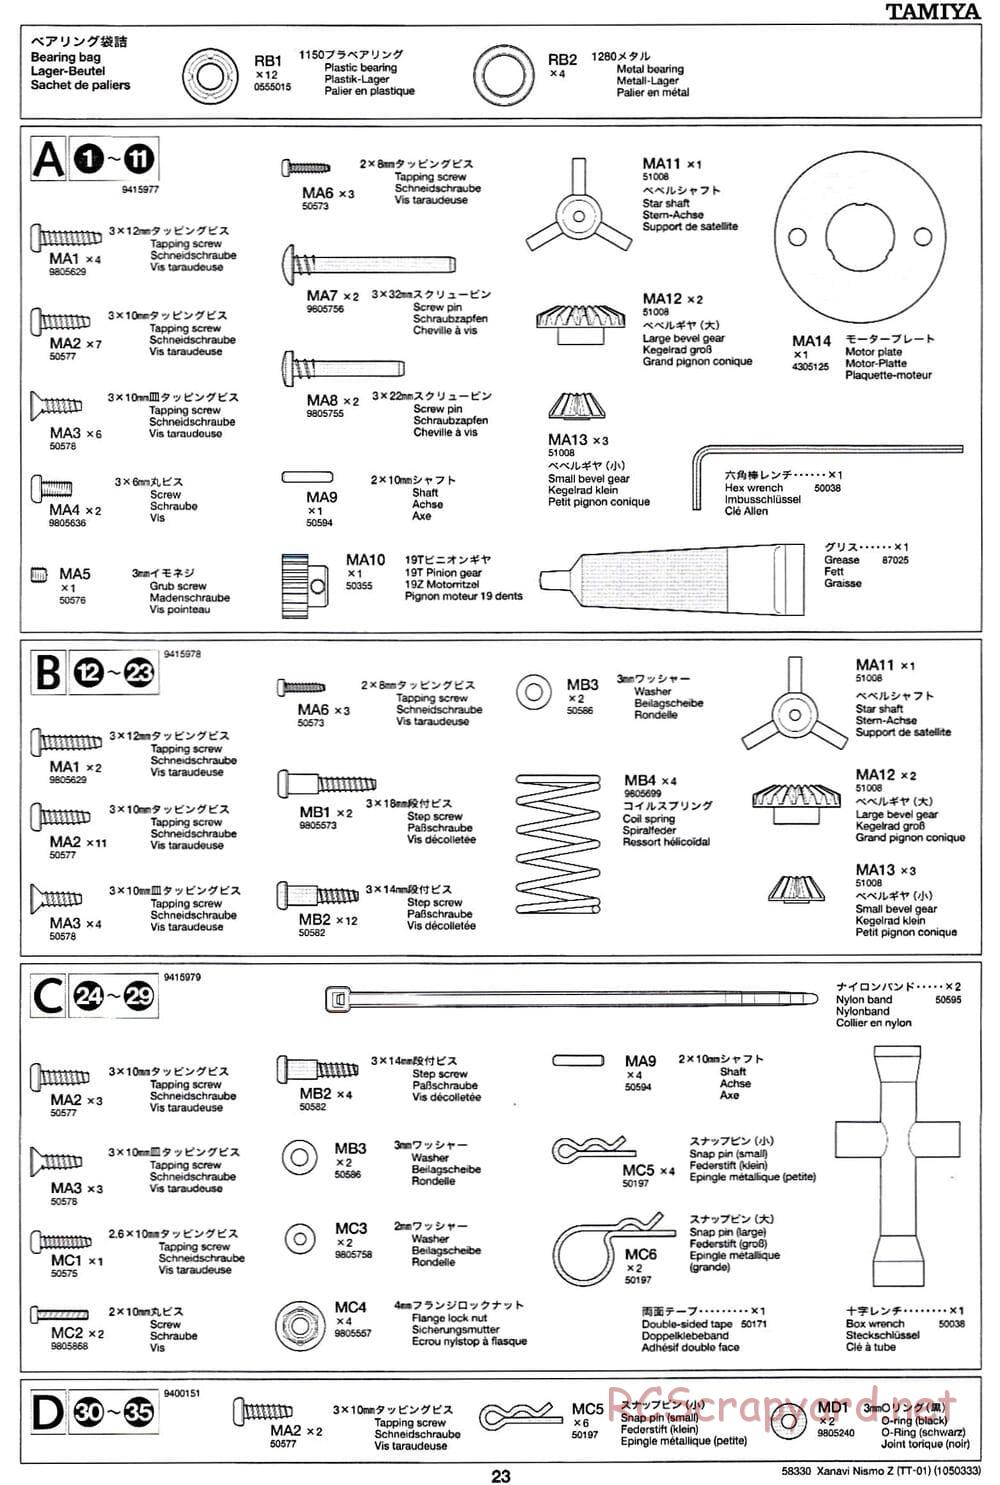 Tamiya - Xanavi Nismo Z - TT-01 Chassis - Manual - Page 23